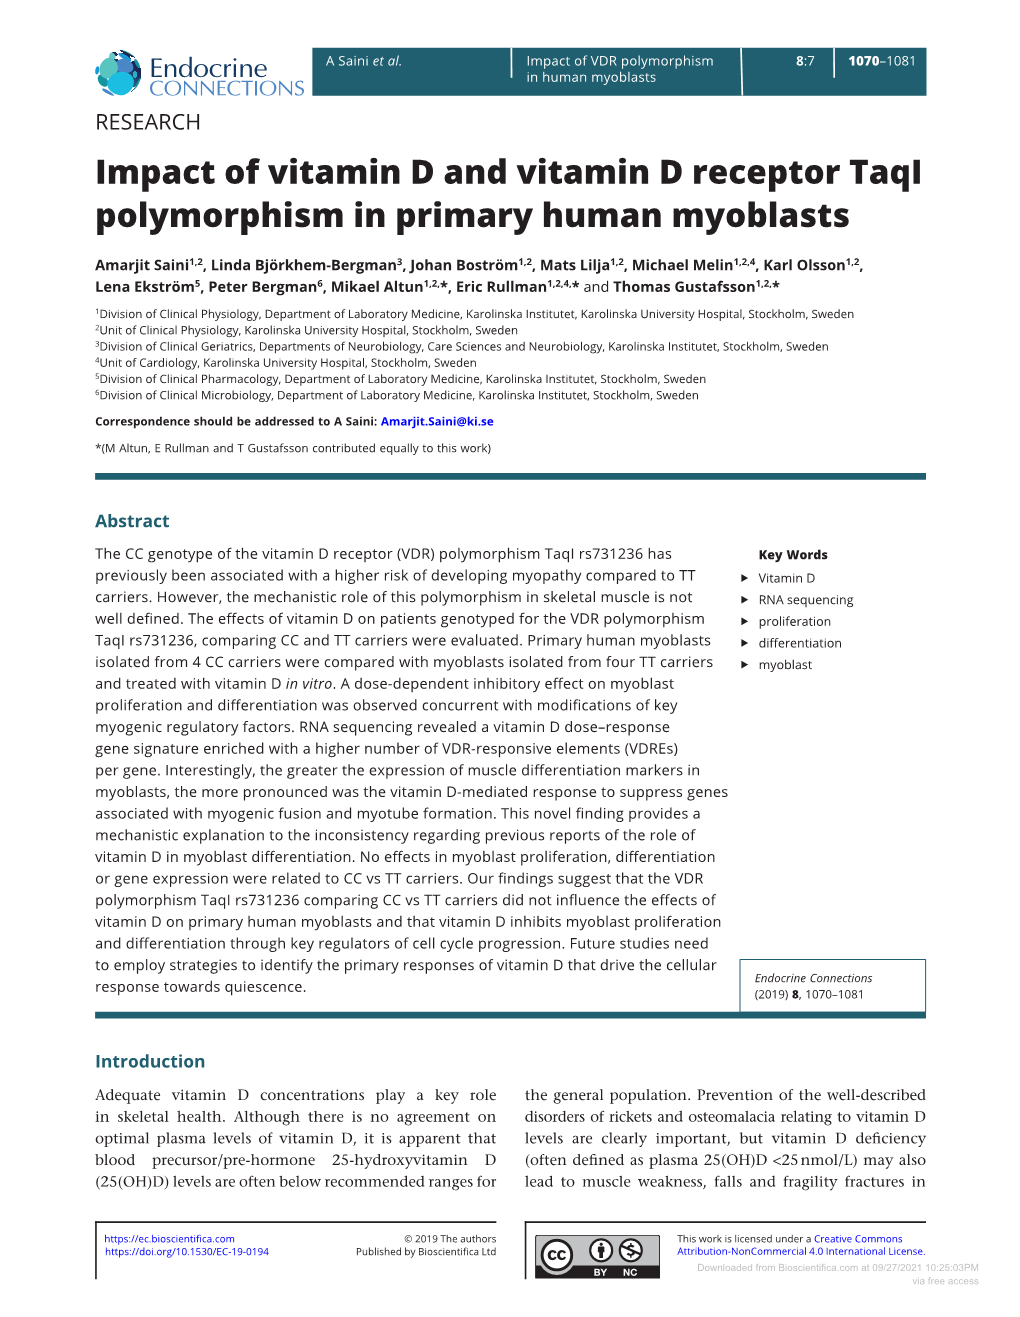 Impact of Vitamin D and Vitamin D Receptor Taqi Polymorphism in Primary Human Myoblasts